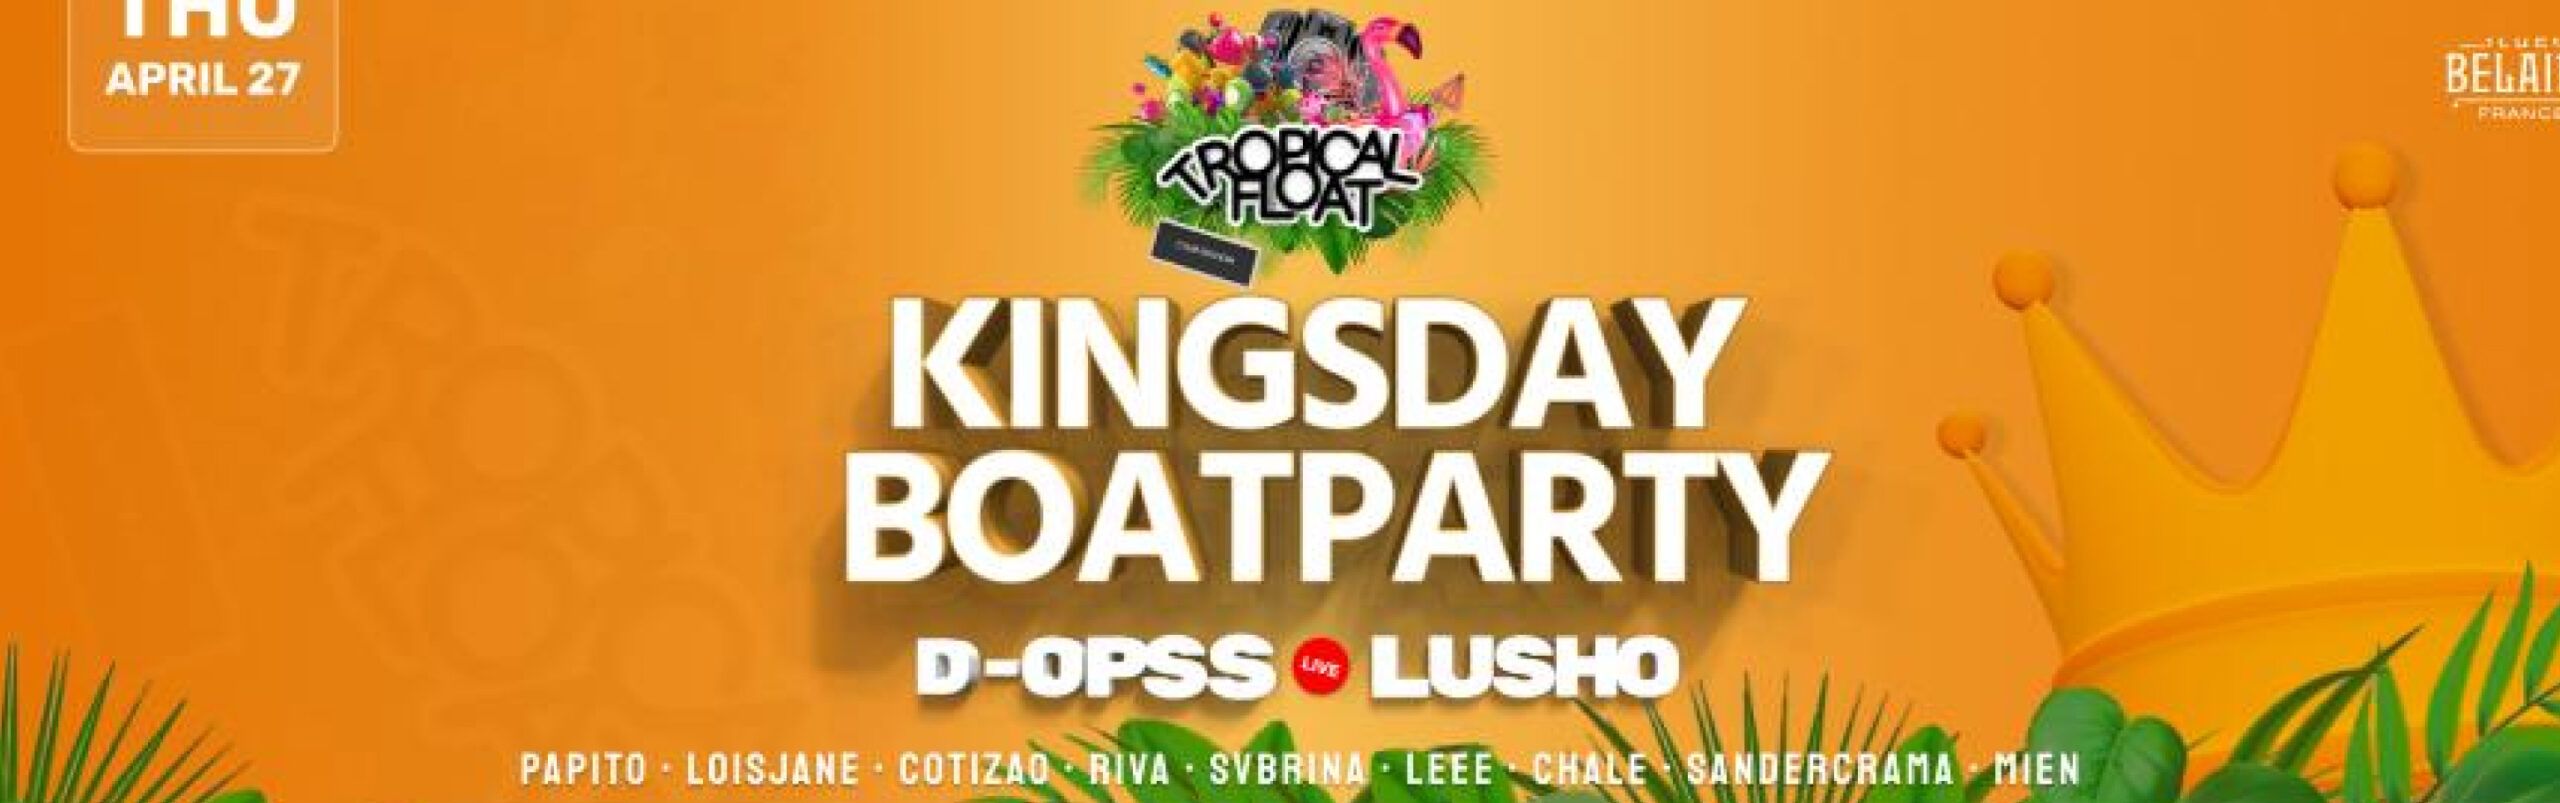 Tropical Float Kingsday Boatparty header